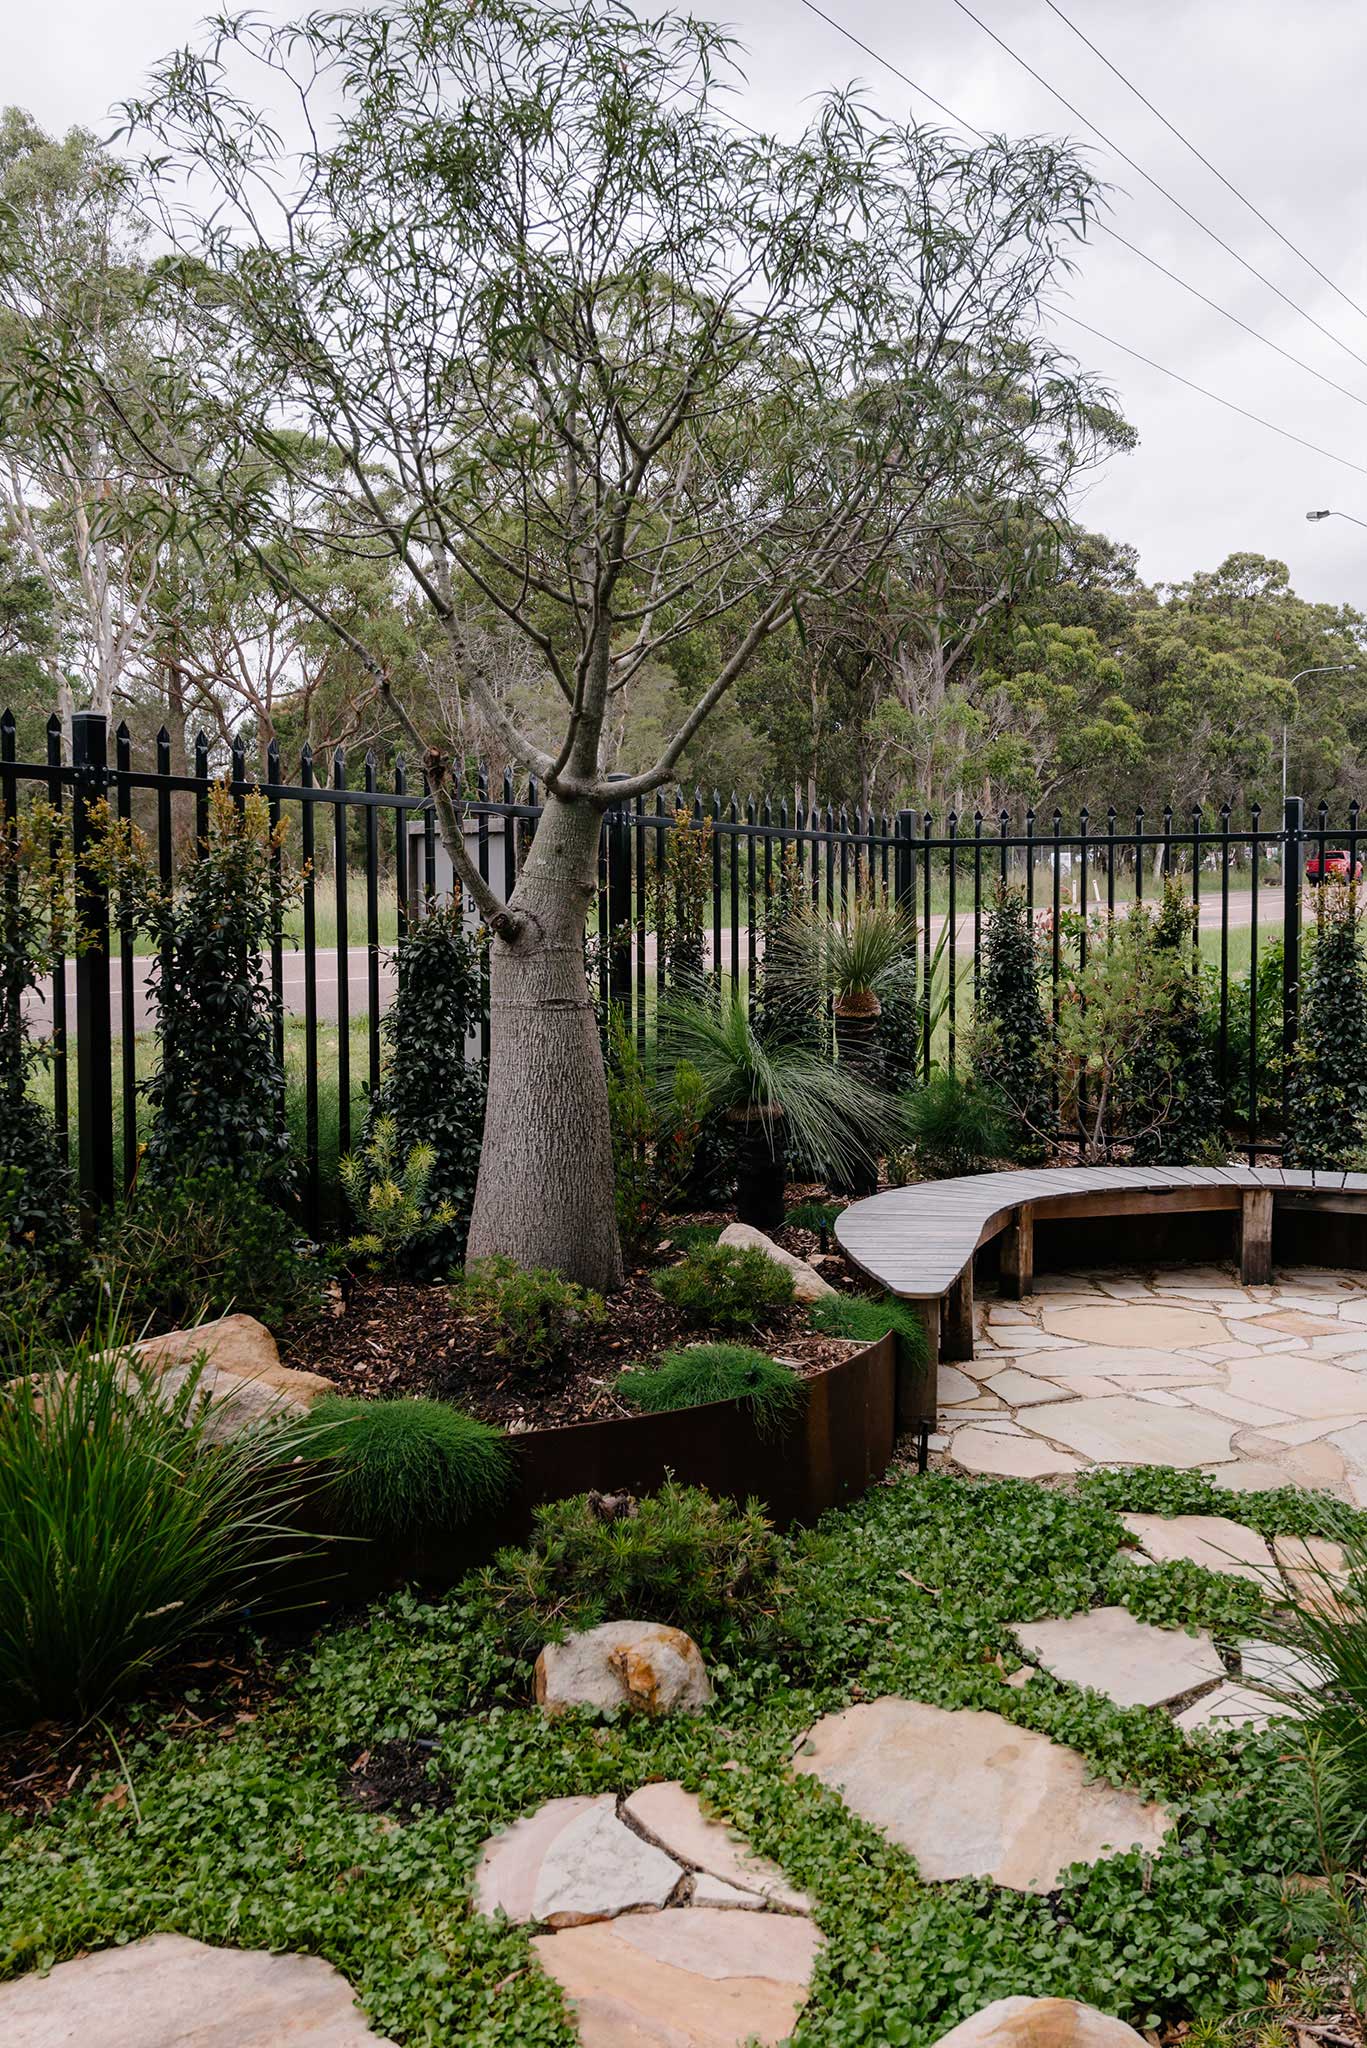 MBS native courtyard landscape design showing bottletree, corten-edged garden beds and entertaining area